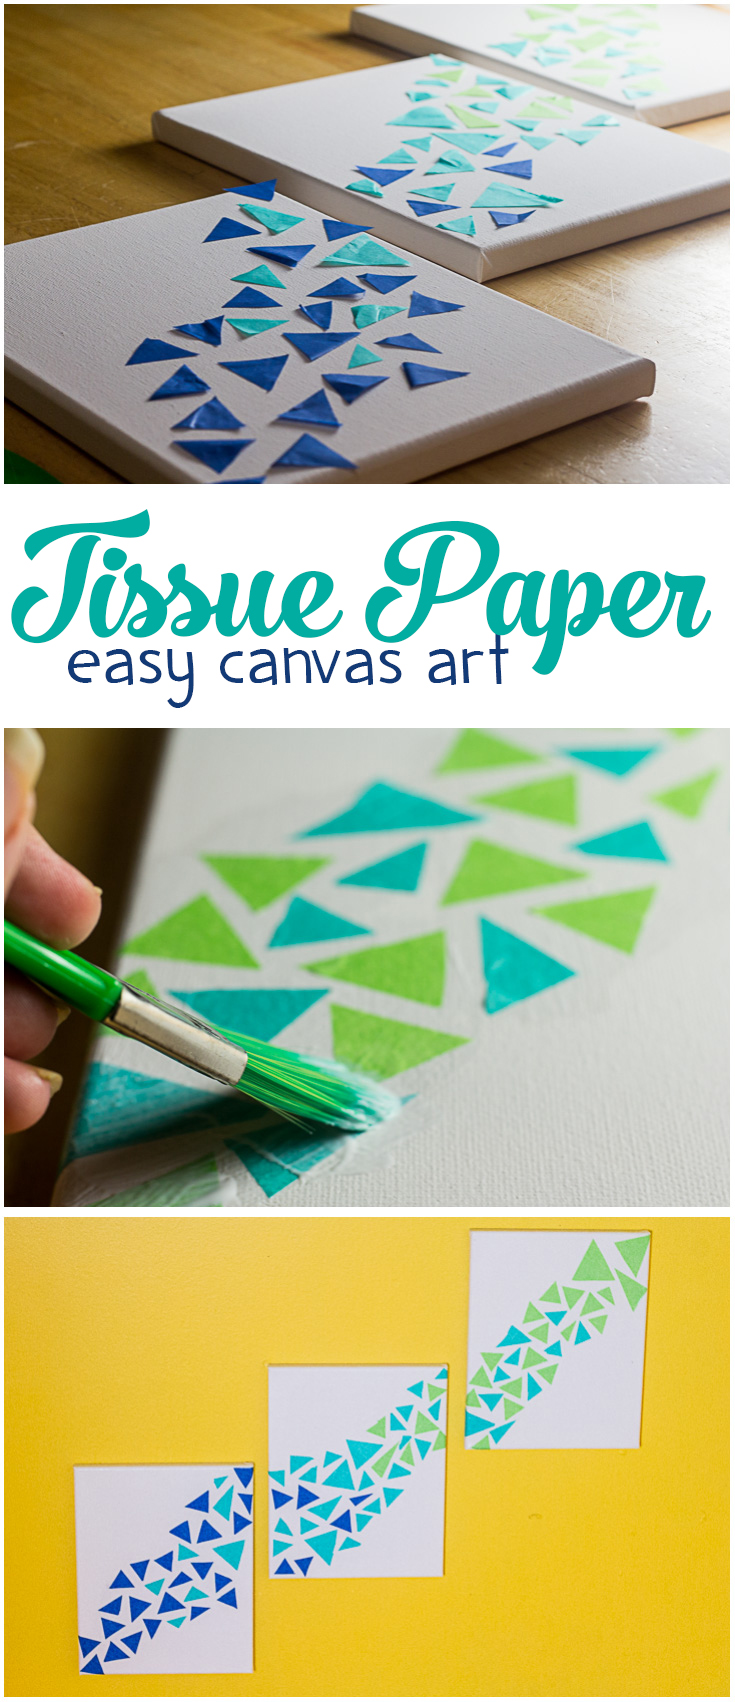 Pin on Art using Tissue Paper